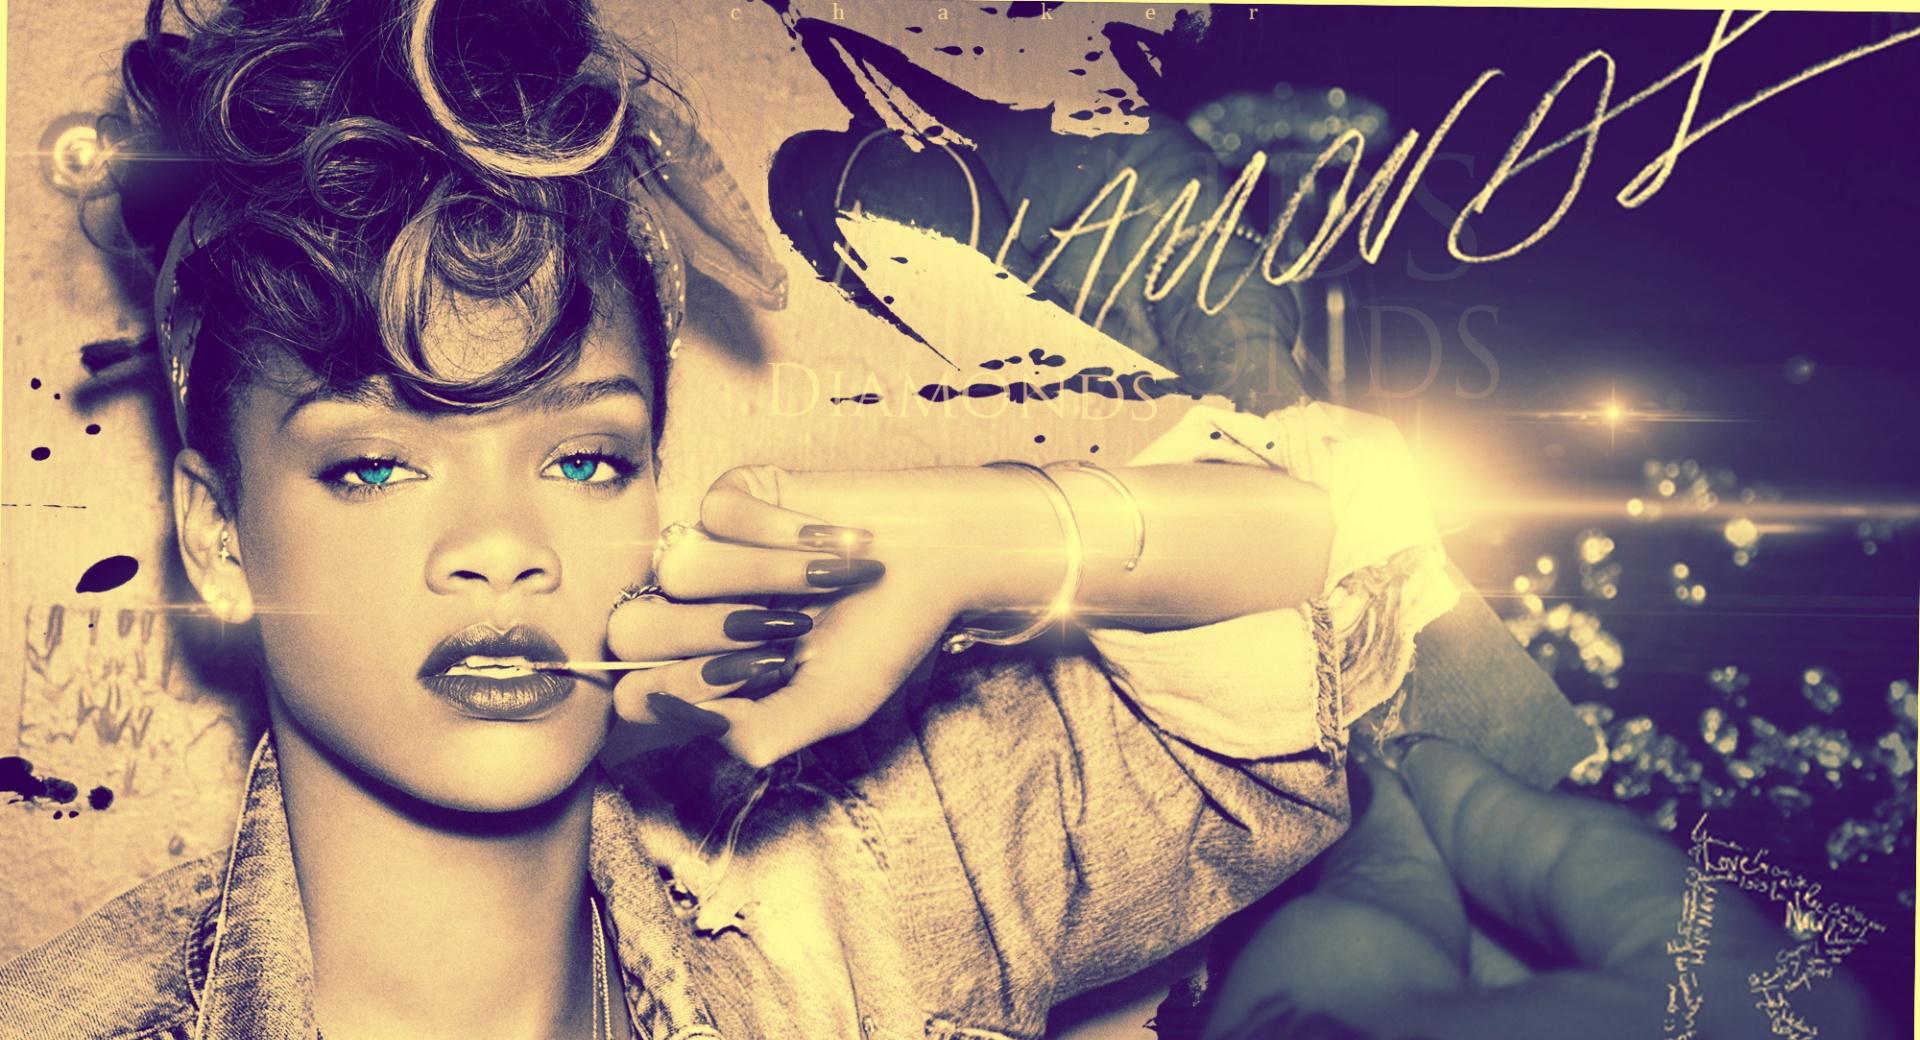 Rihanna-Diamonds at 1024 x 768 size wallpapers HD quality